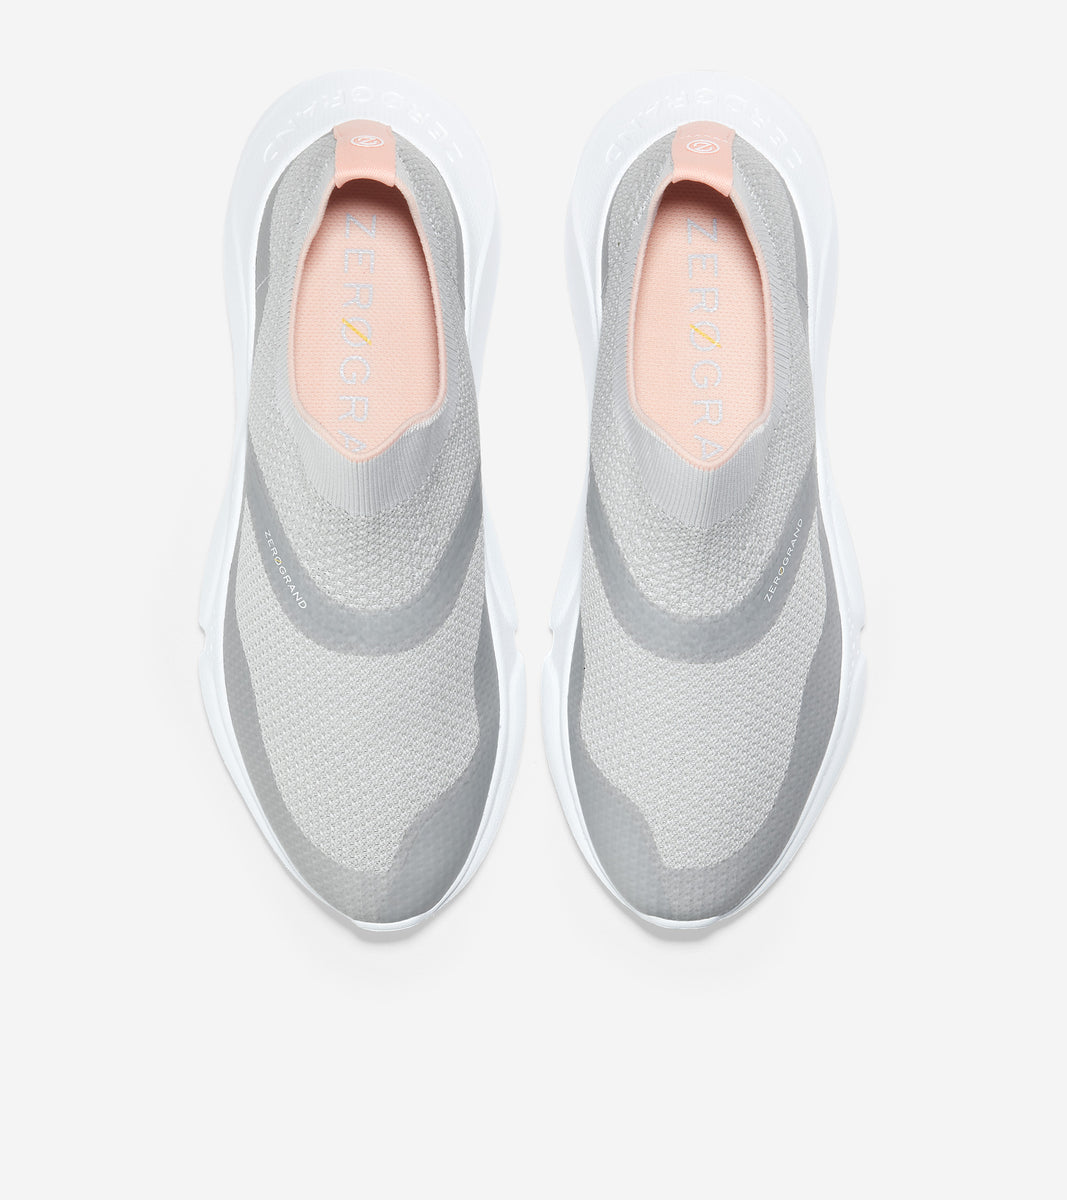 ColeHaan-Zerøgrand Radiant Slip On Sneaker-w21299-Cool Gray Tpu- Cool Gray & White Knit- Trop Peach- Optic White